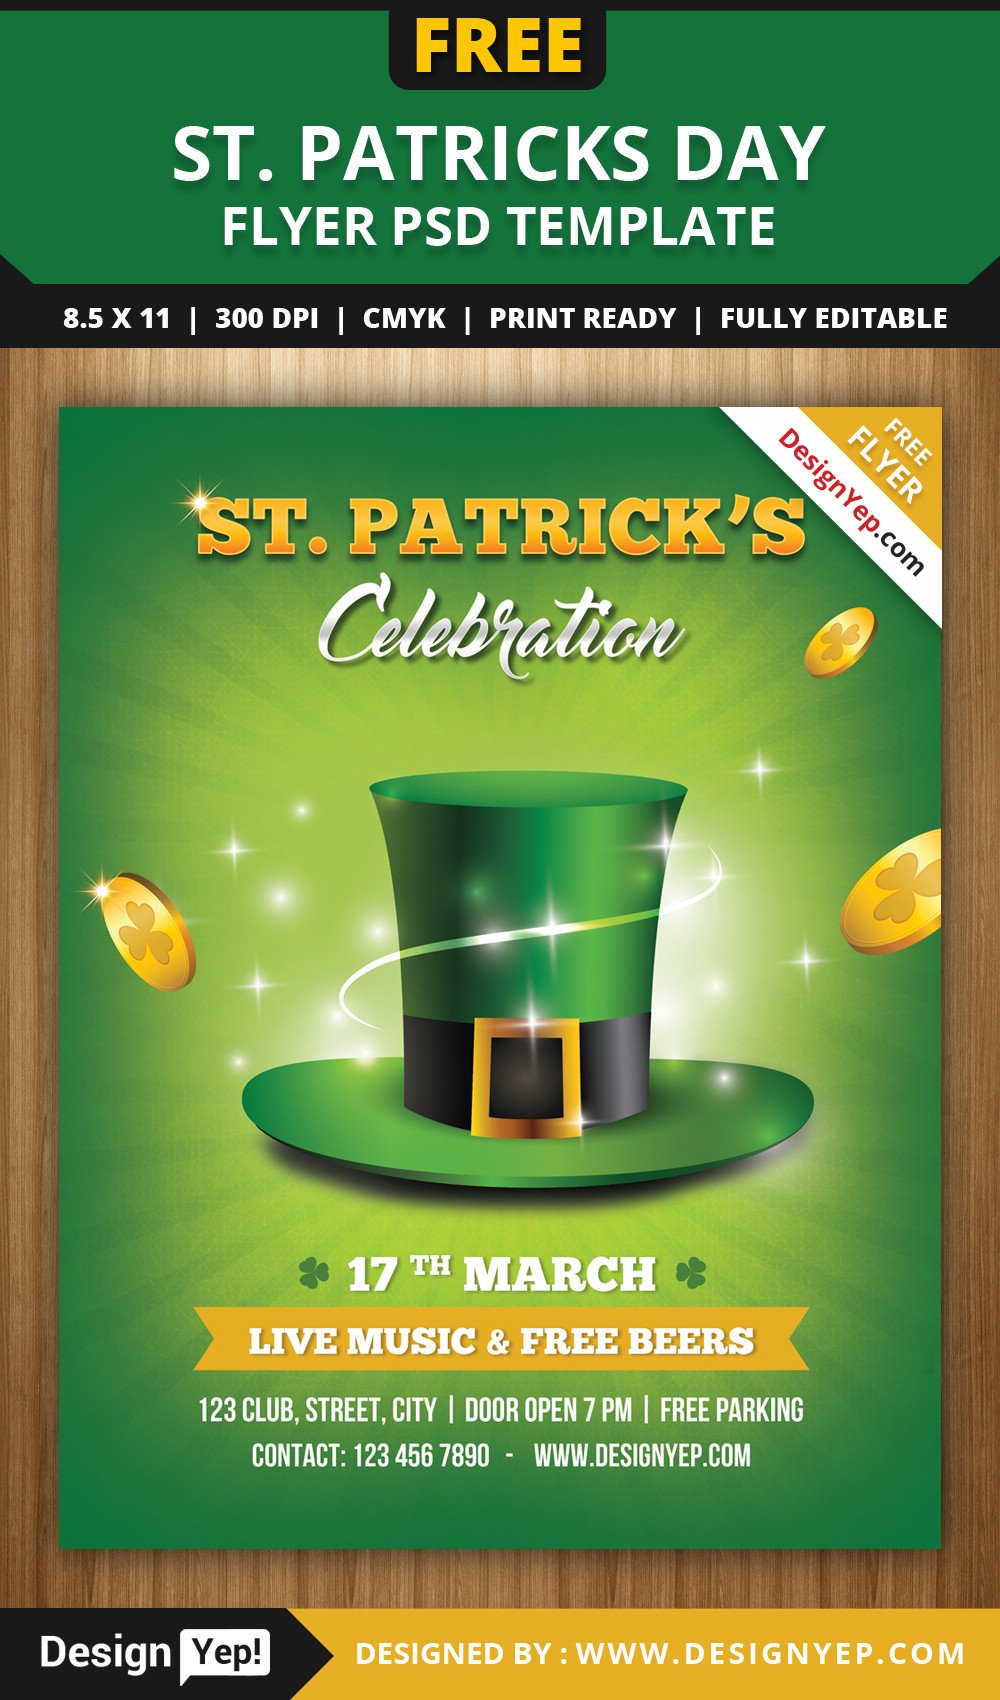 Free St Patricks Day Flyer Template PSD DesignYep